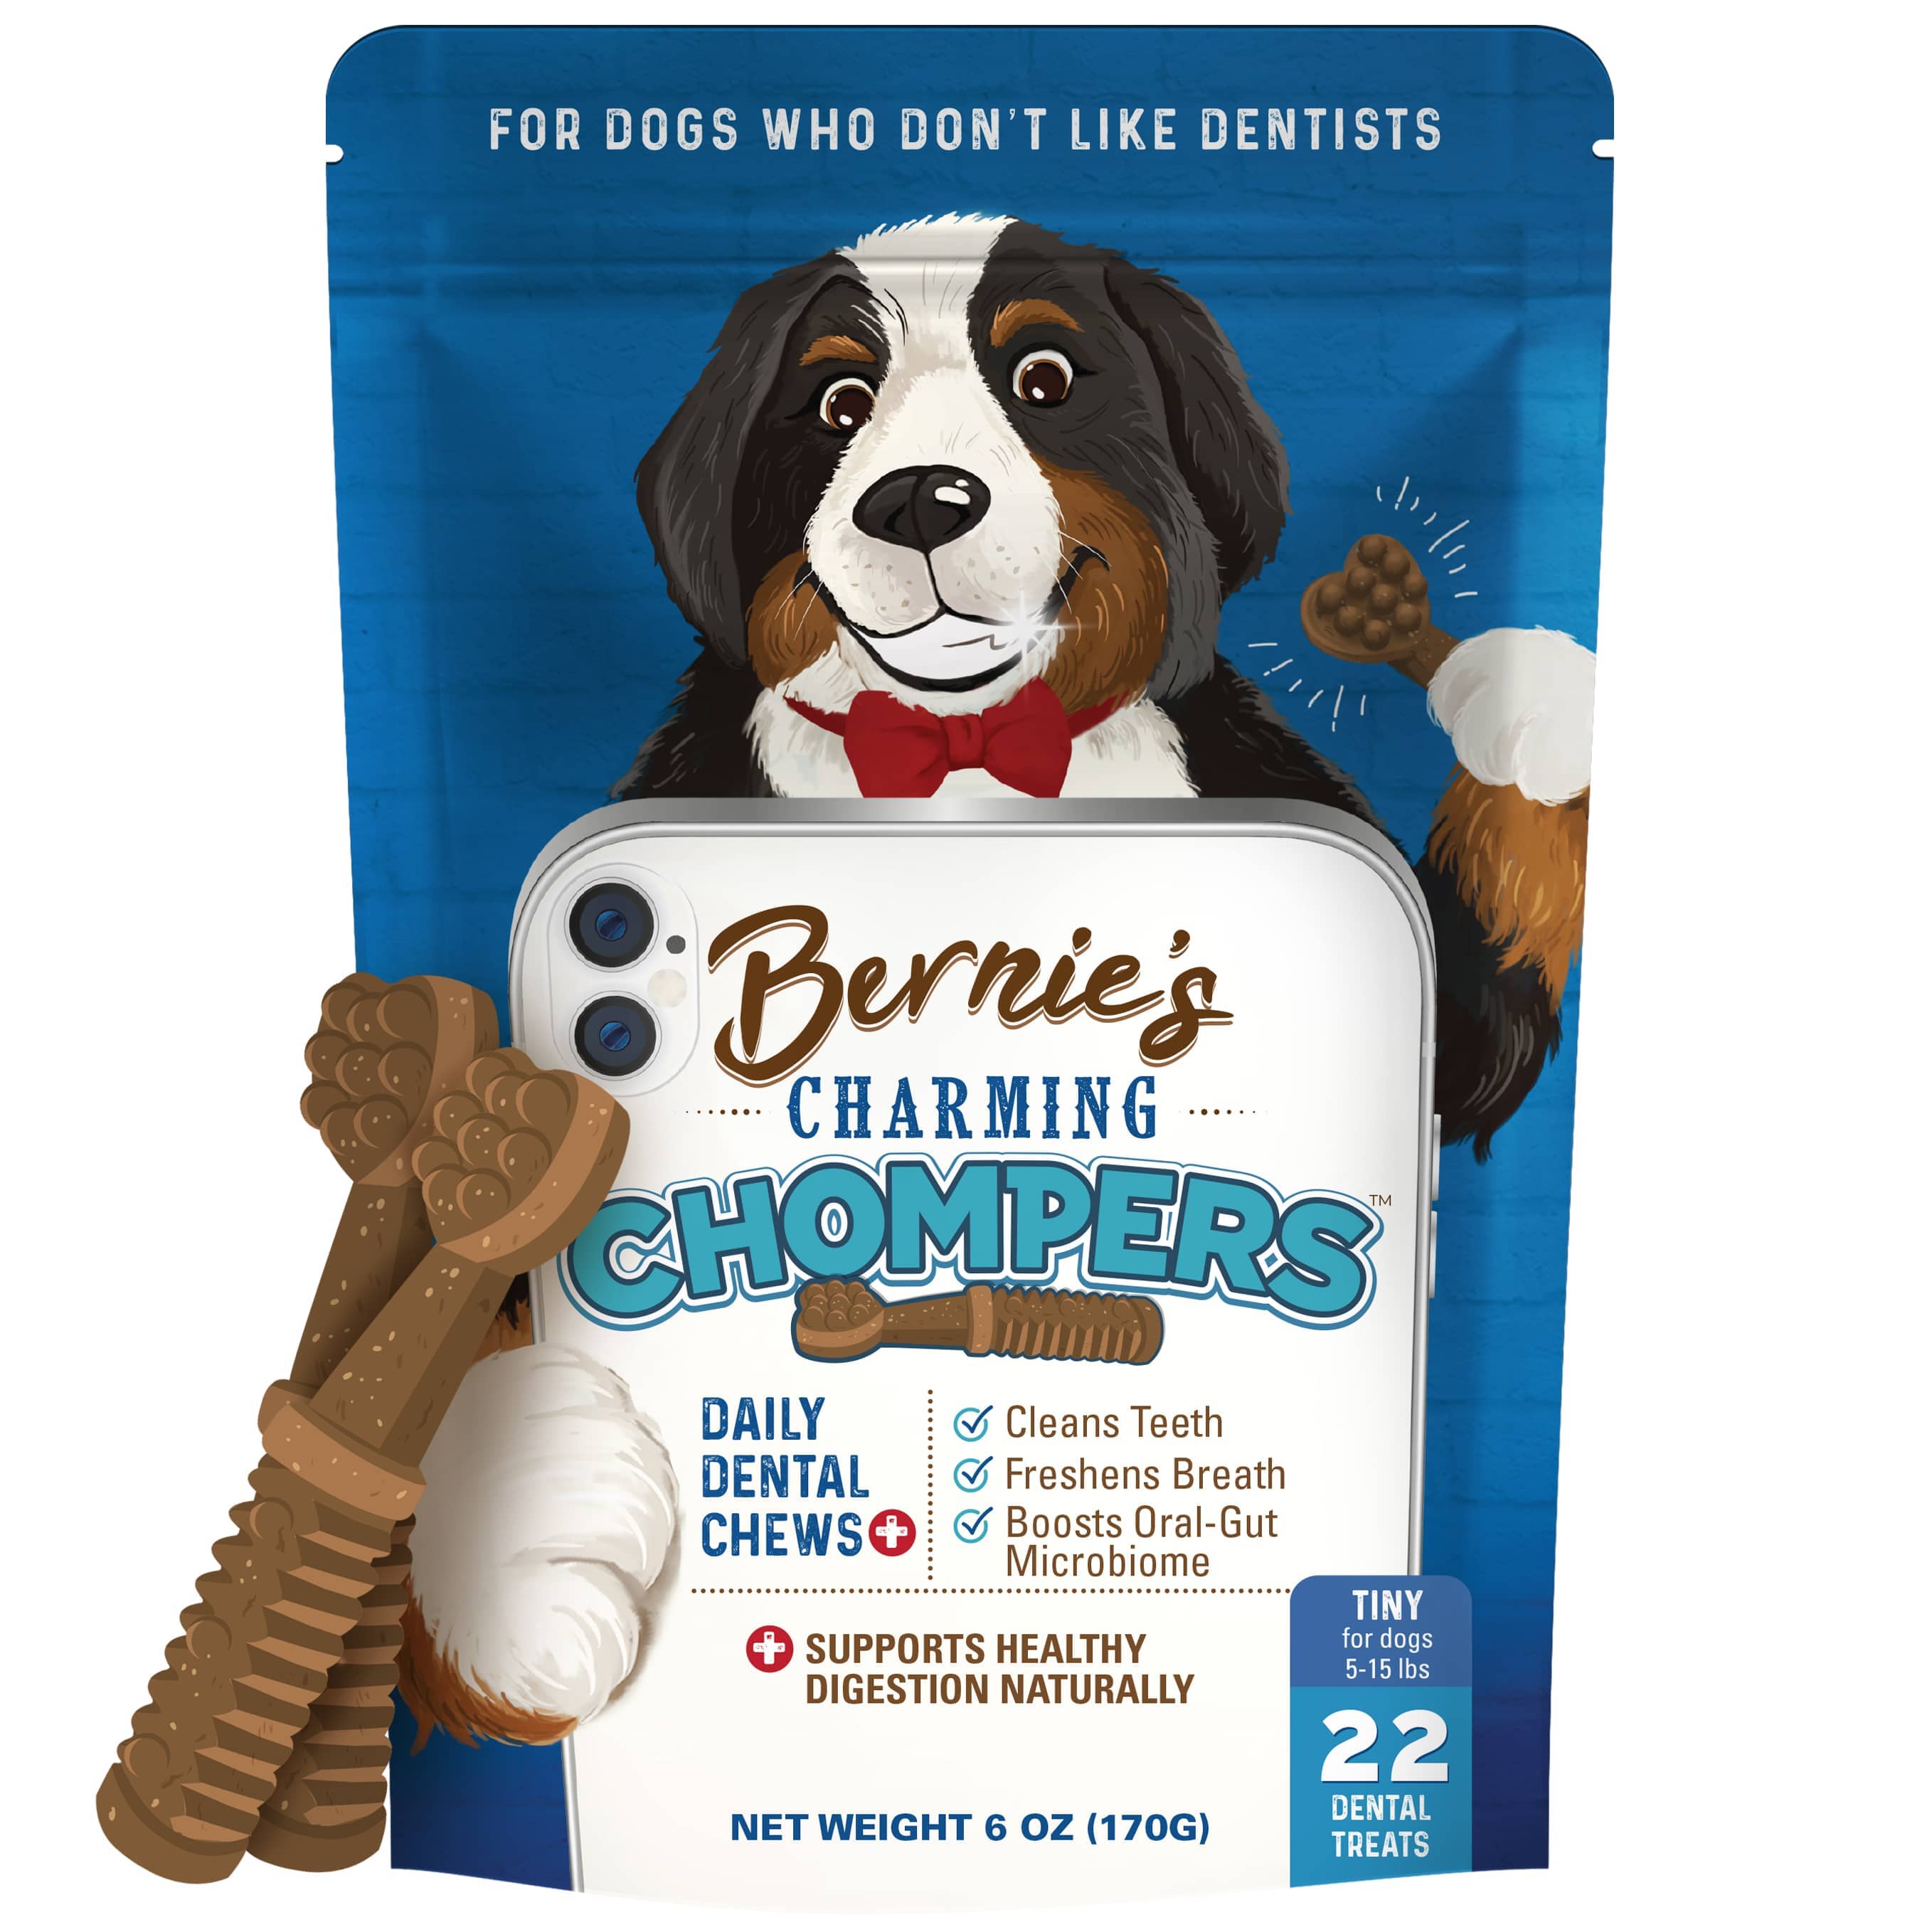 Bernie's Charming Chompers Digestive Supplement Bernie's Best Tiny Dogs (5-15 lb) 6 oz - 22 Count 